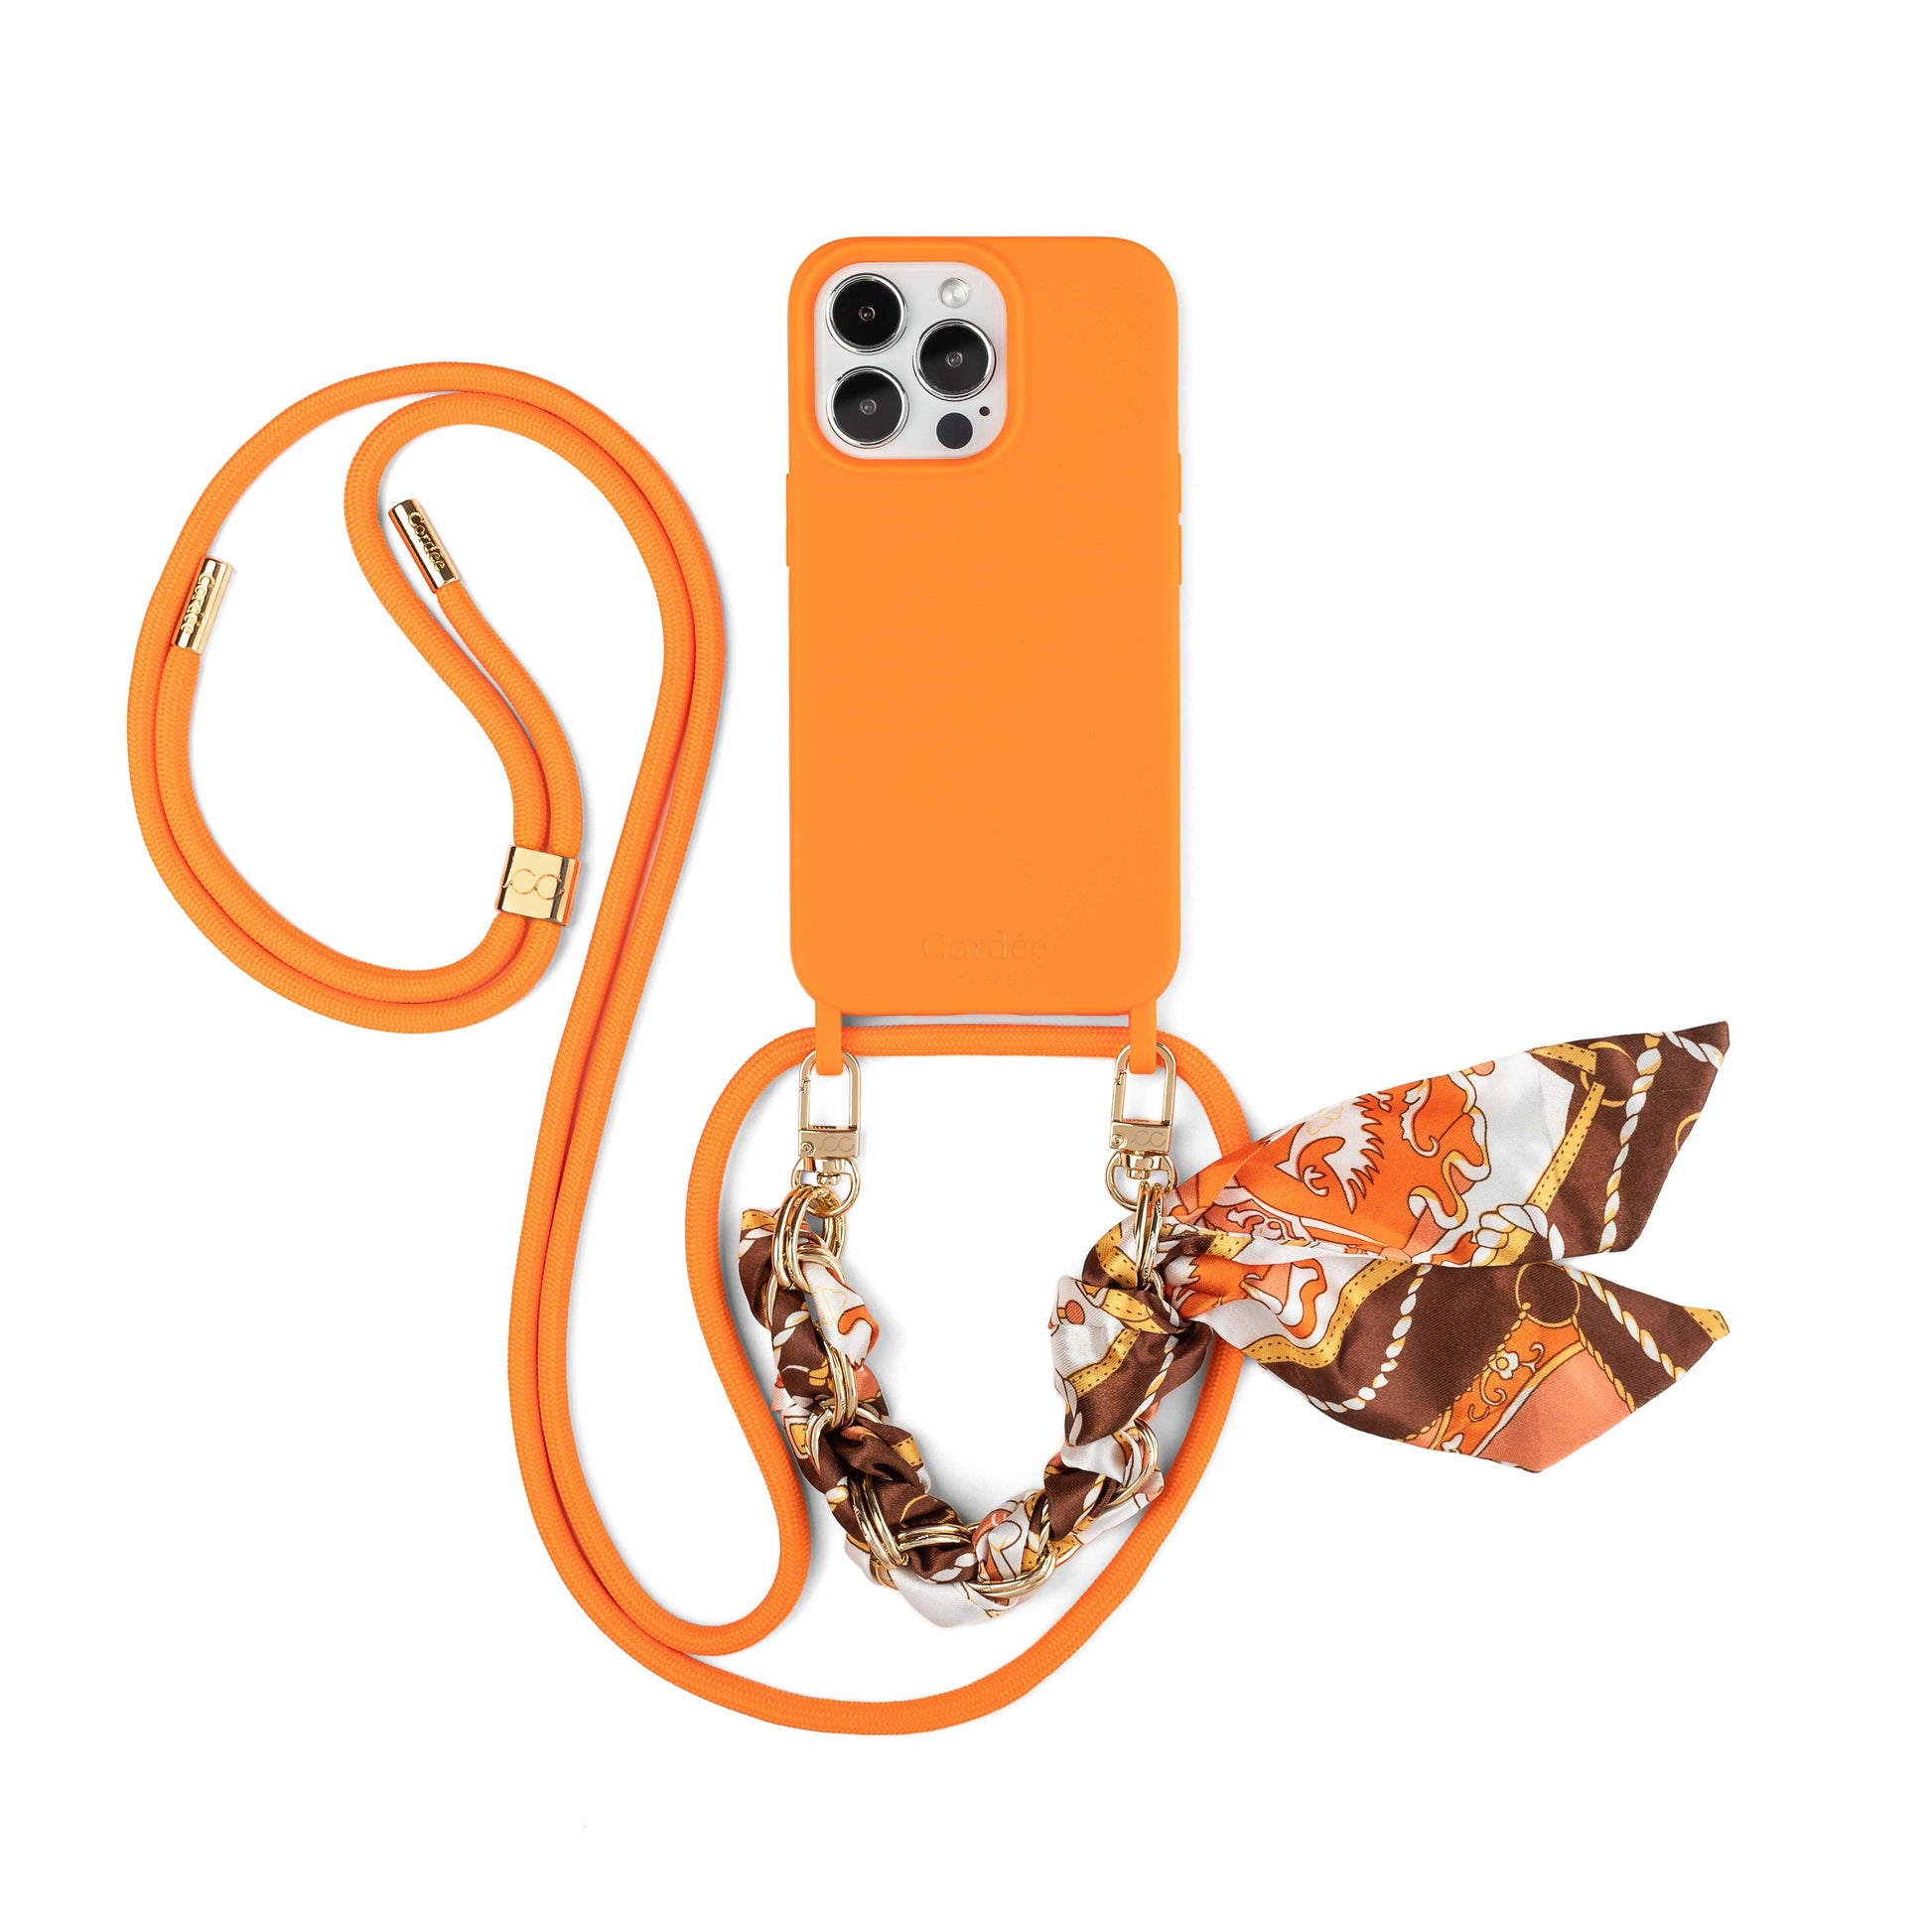 Rio Phone Strap Set Orange - Cordée Cases